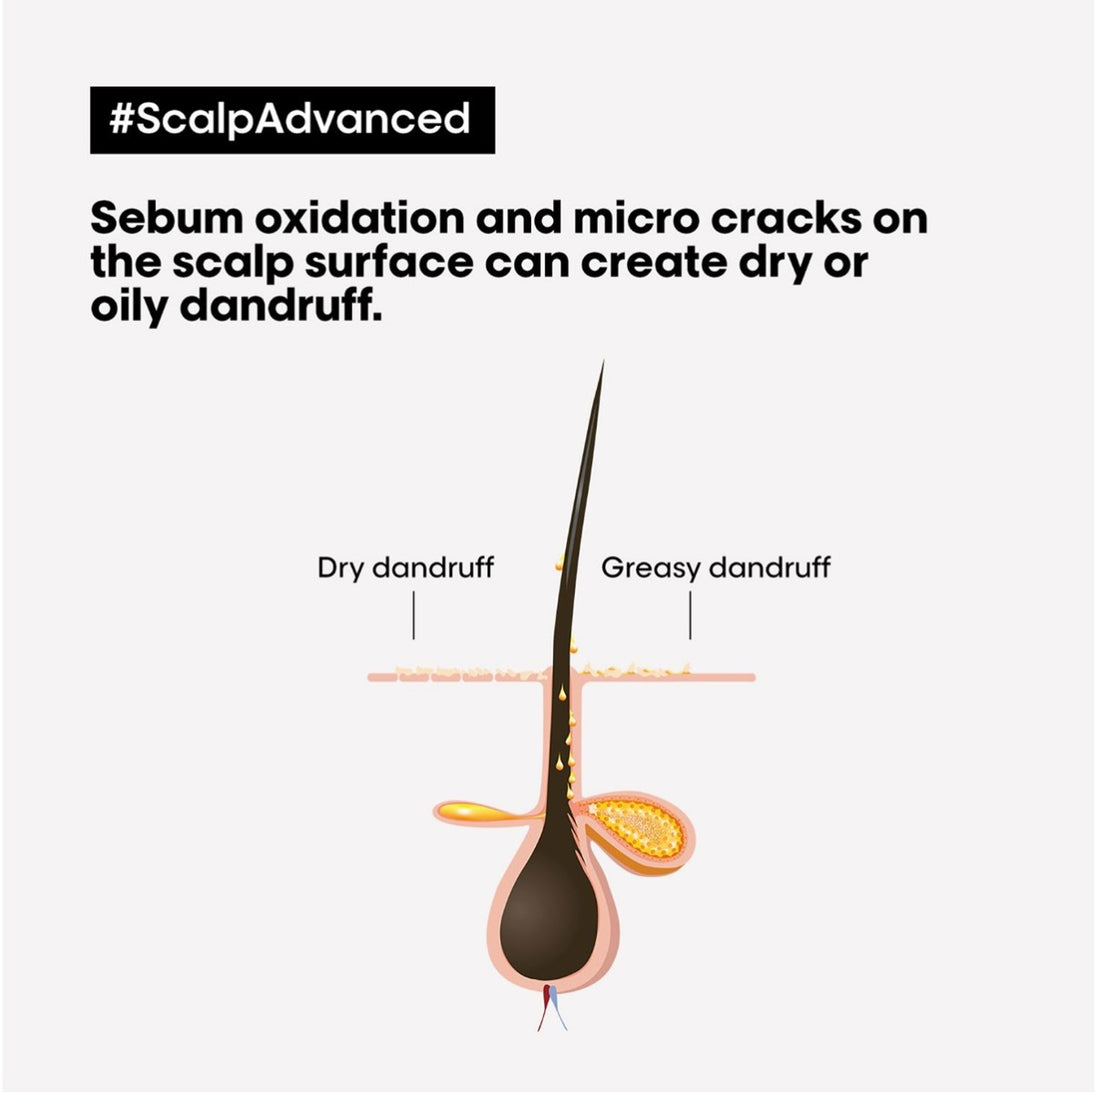 Serie Expert Scalp Advanced Dermo-clarifier Shampoo 300ml